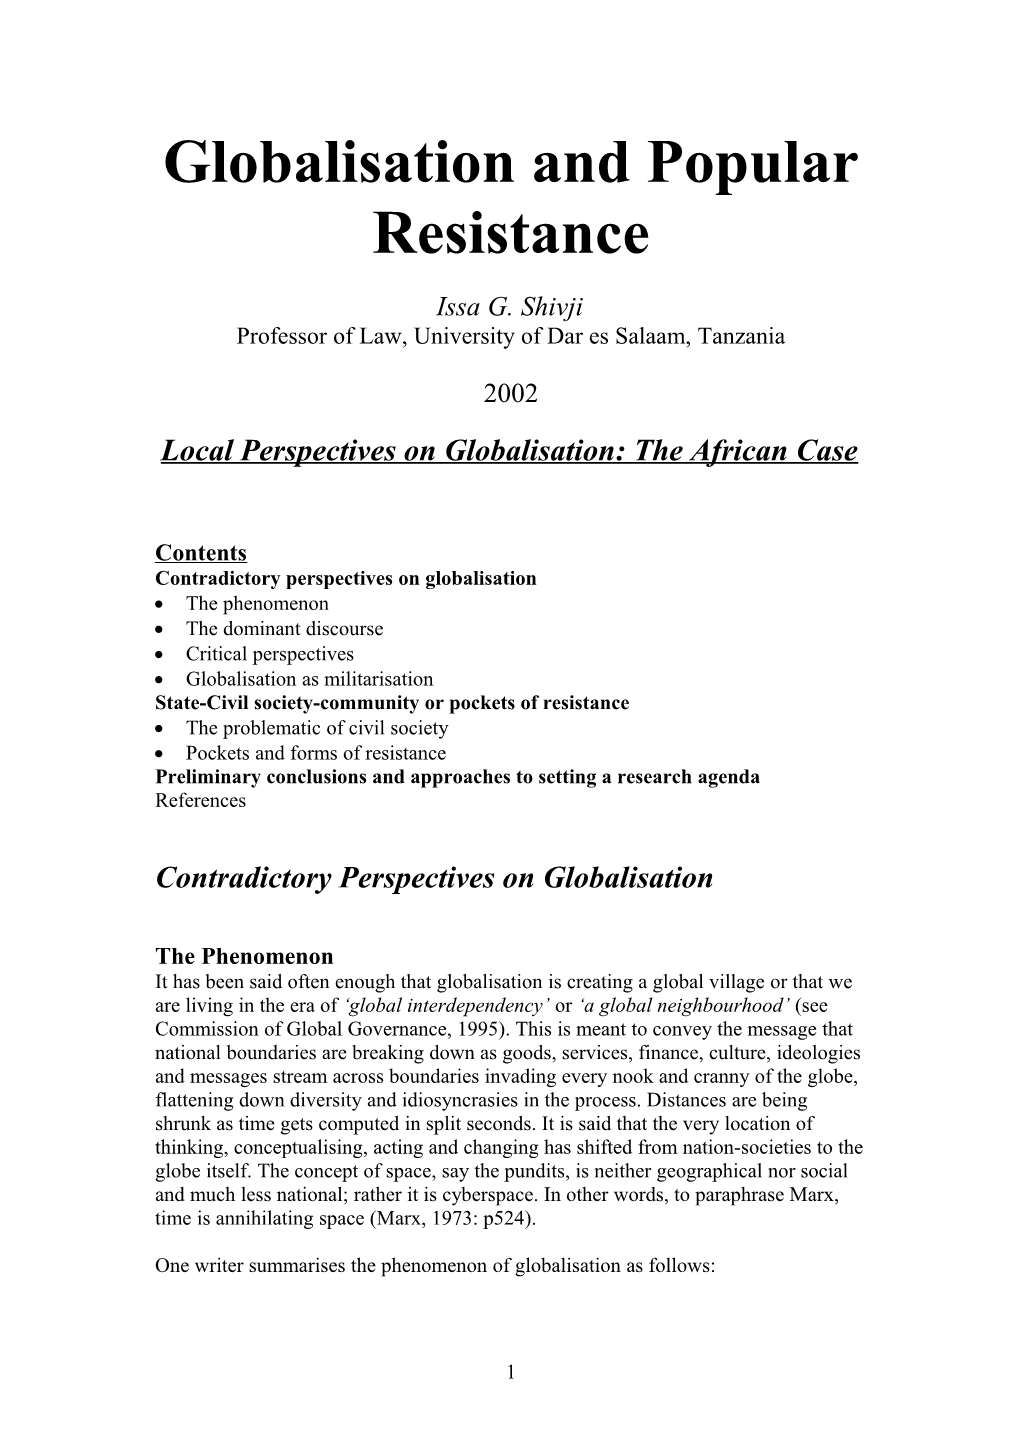 Globalisation and Popular Resistance